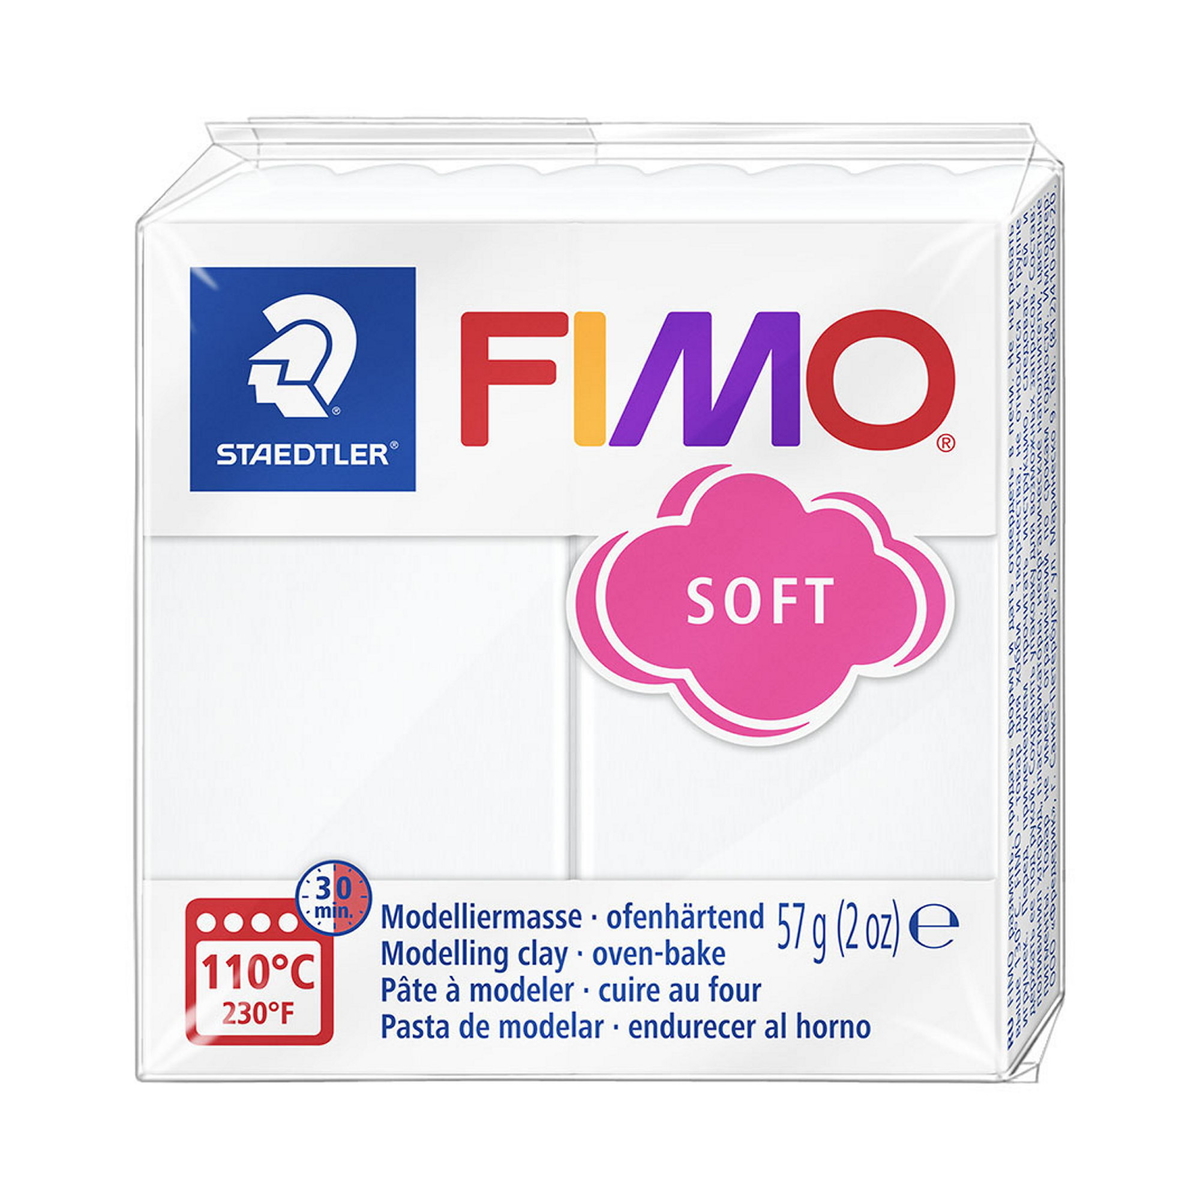 FIMO SOFT 57 G WHITE